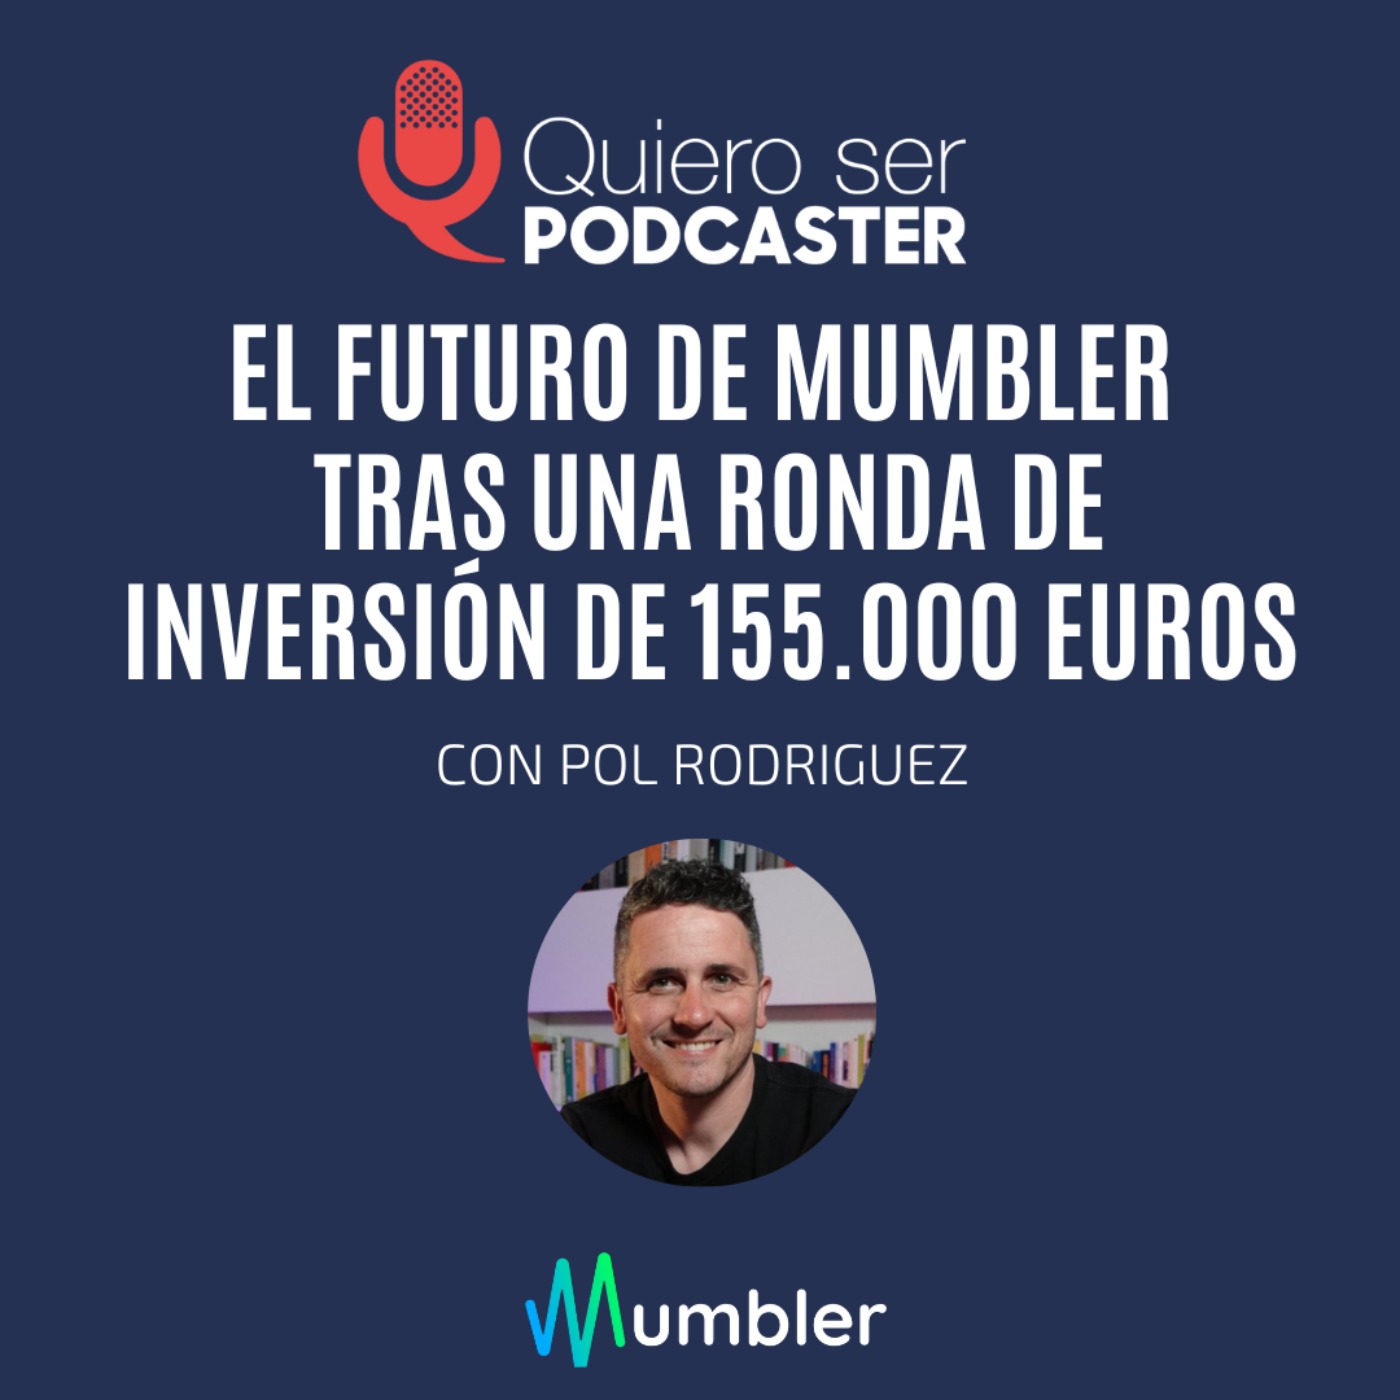 El futuro de Mumbler tras una ronda de inversión de 155.000 euros @getmumbler @polrodriguezriu